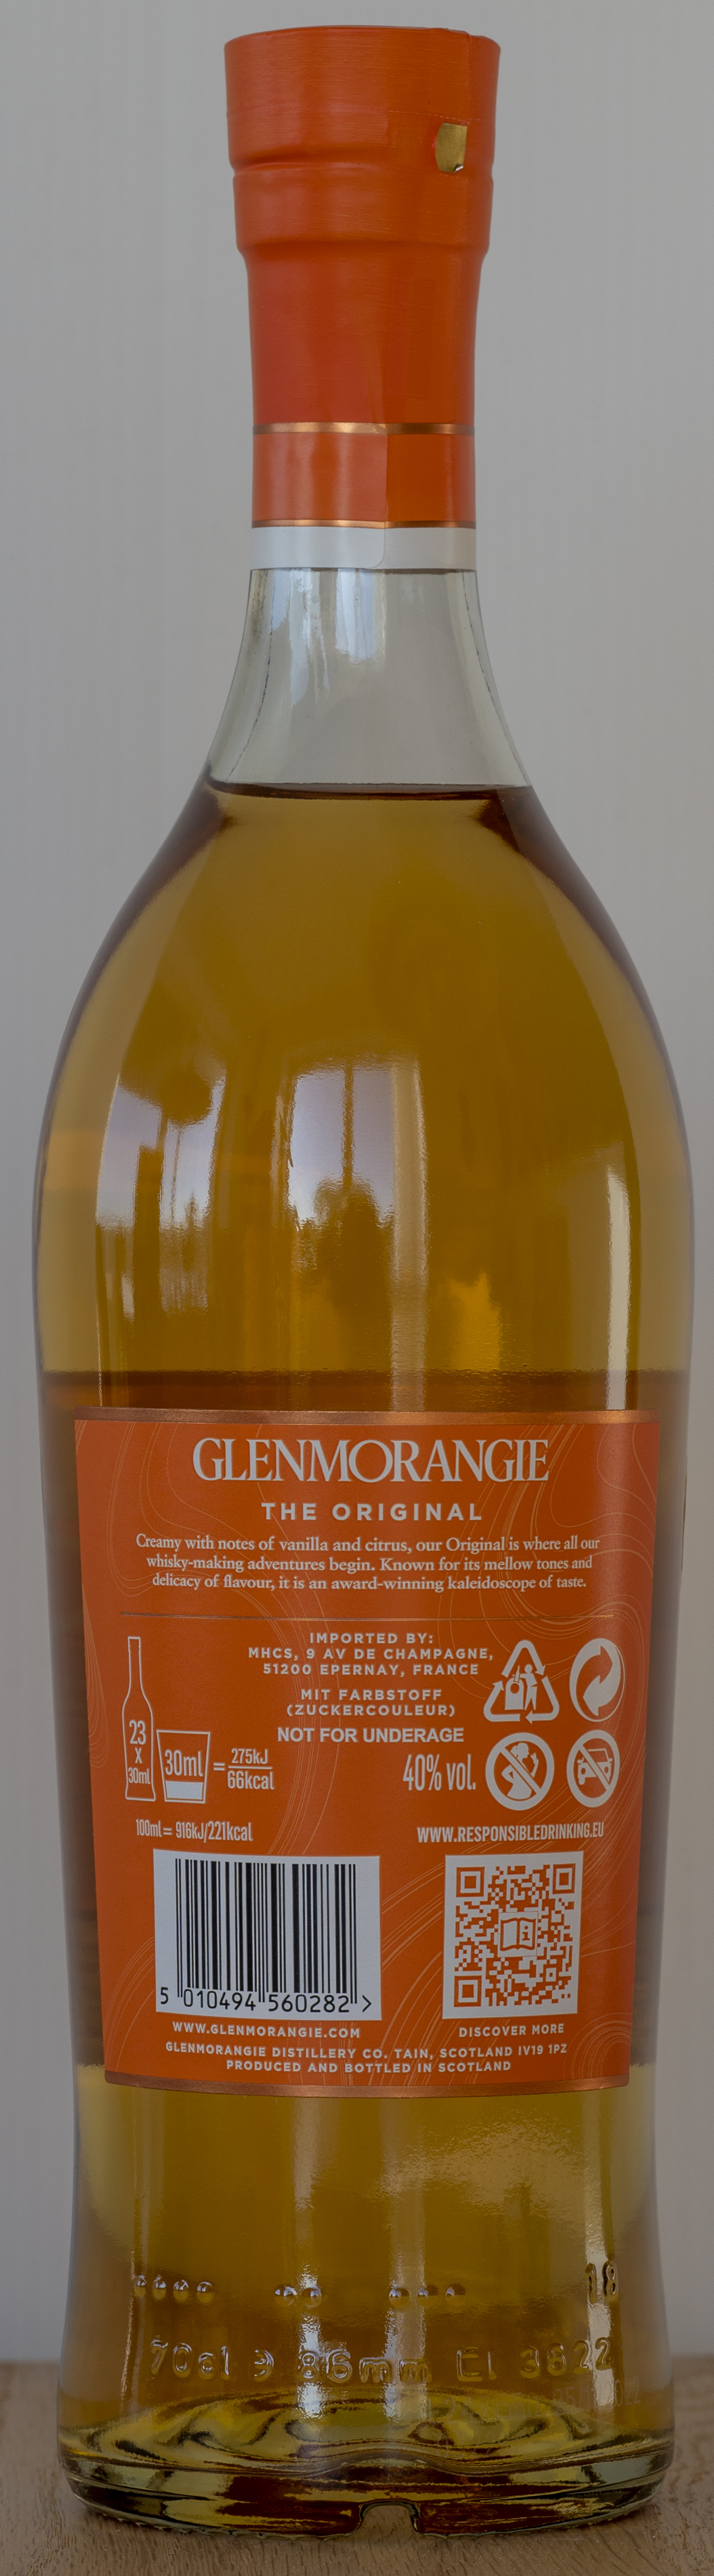 Billede: Z62_6452 - Glenmorangie 10 - bottle back.jpg